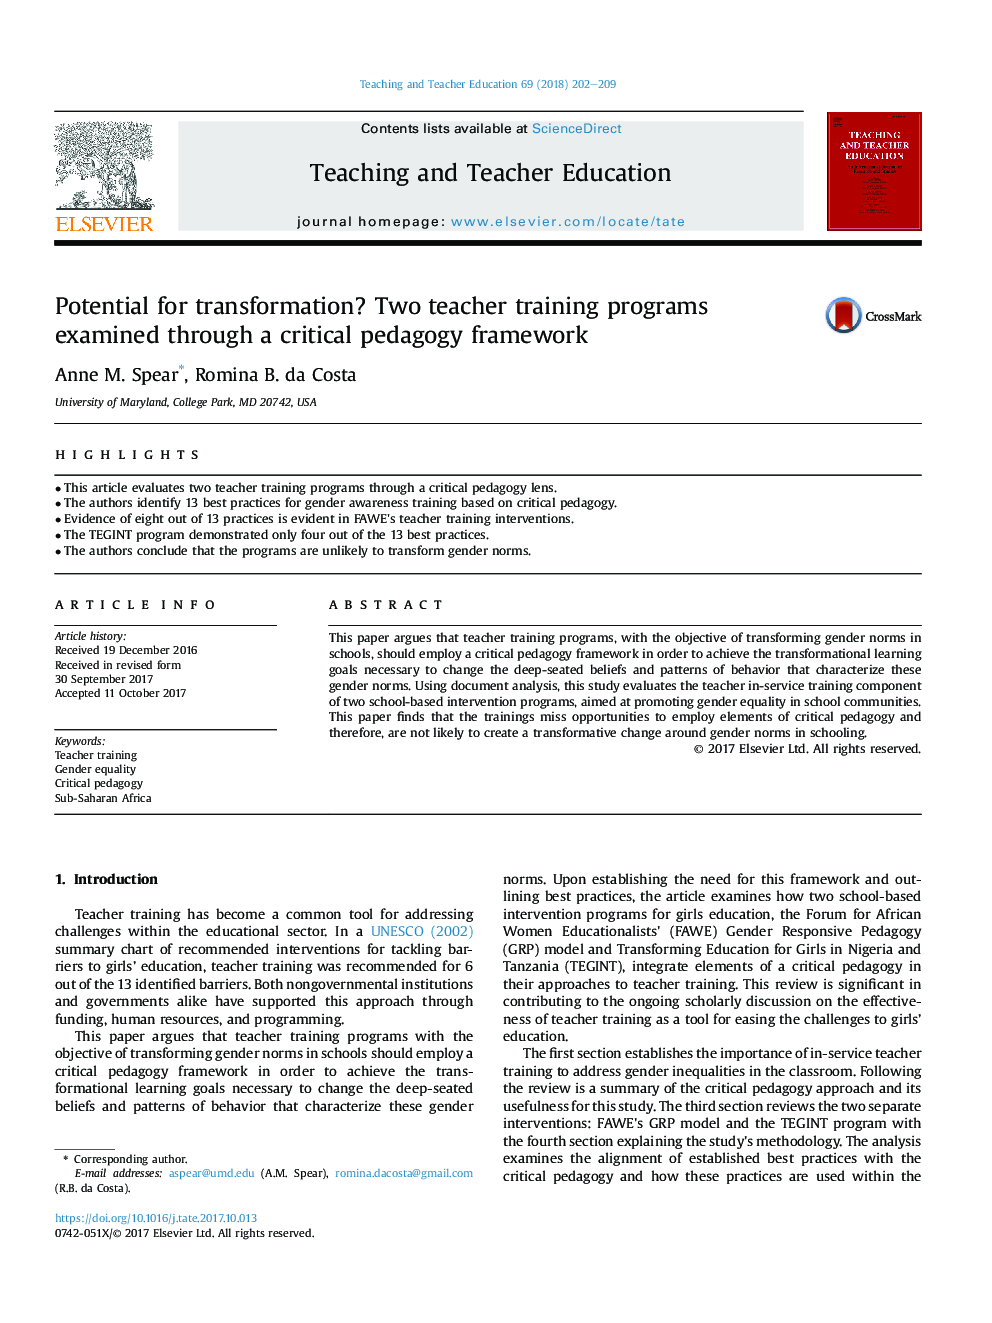 Potential for transformation? Two teacher training programs examined through a critical pedagogy framework